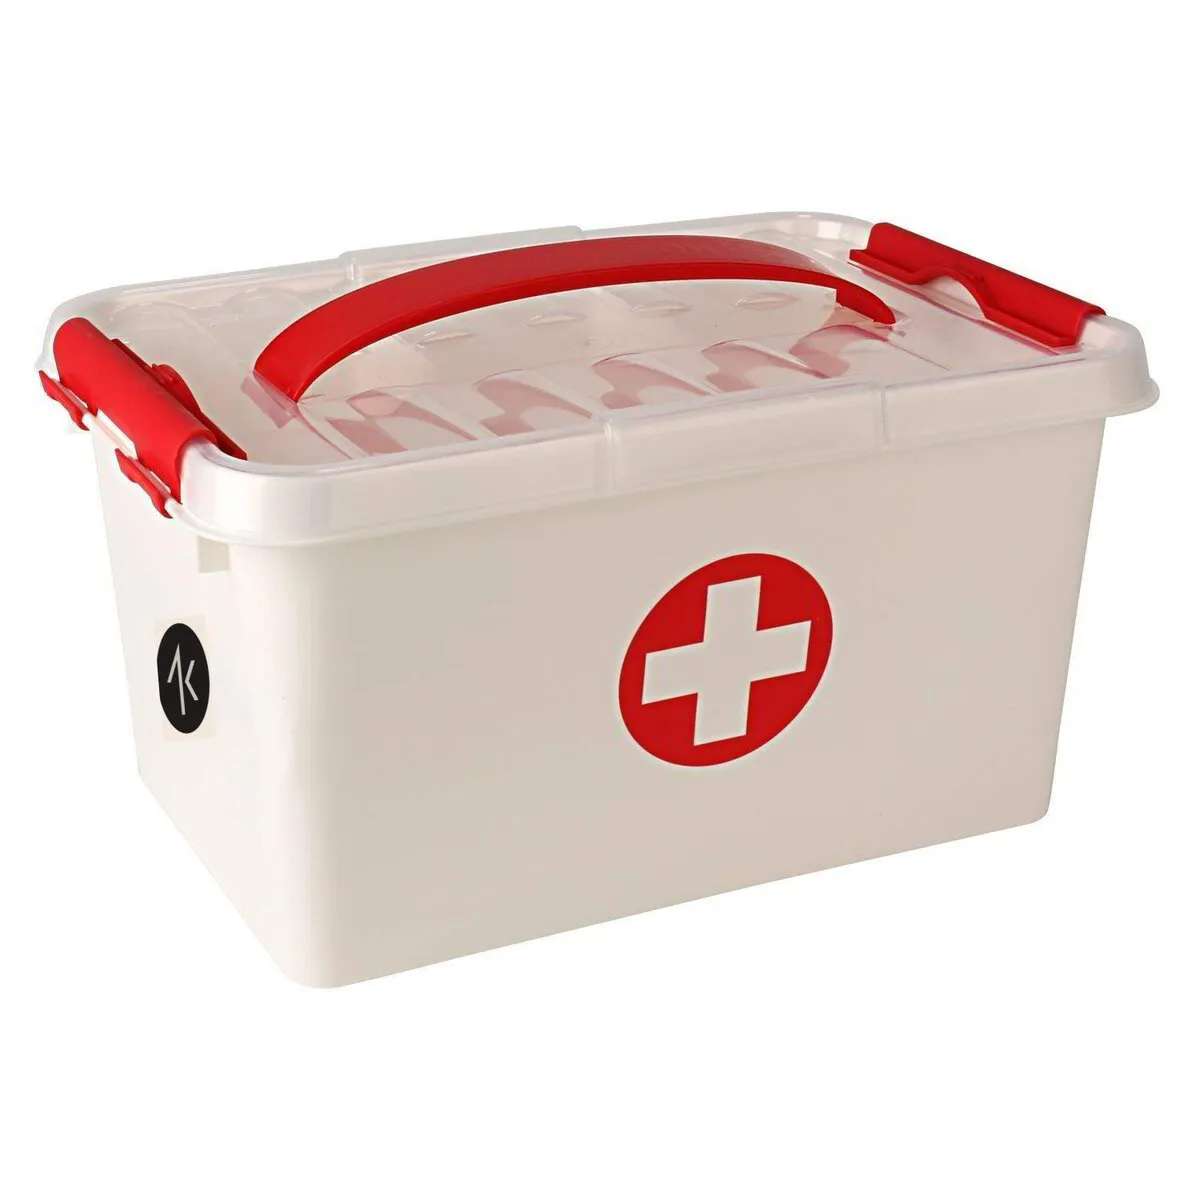 First Aid Box- Empty